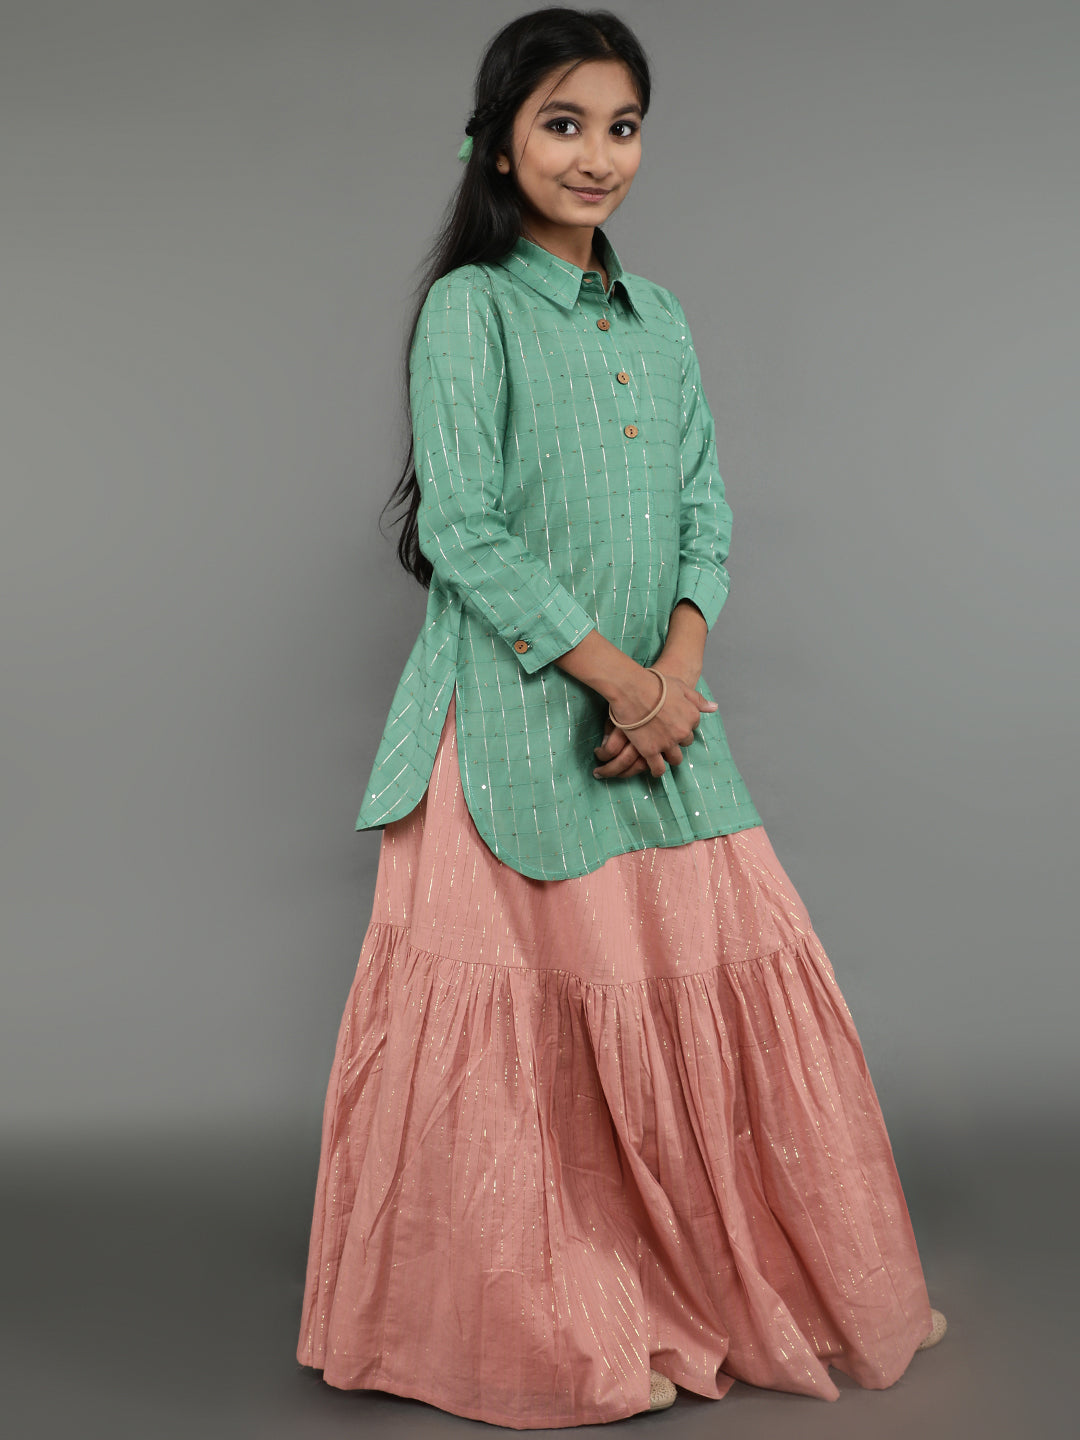 Mother Daughter Combo-Green & Pink Sequin Lehenga Choli Set